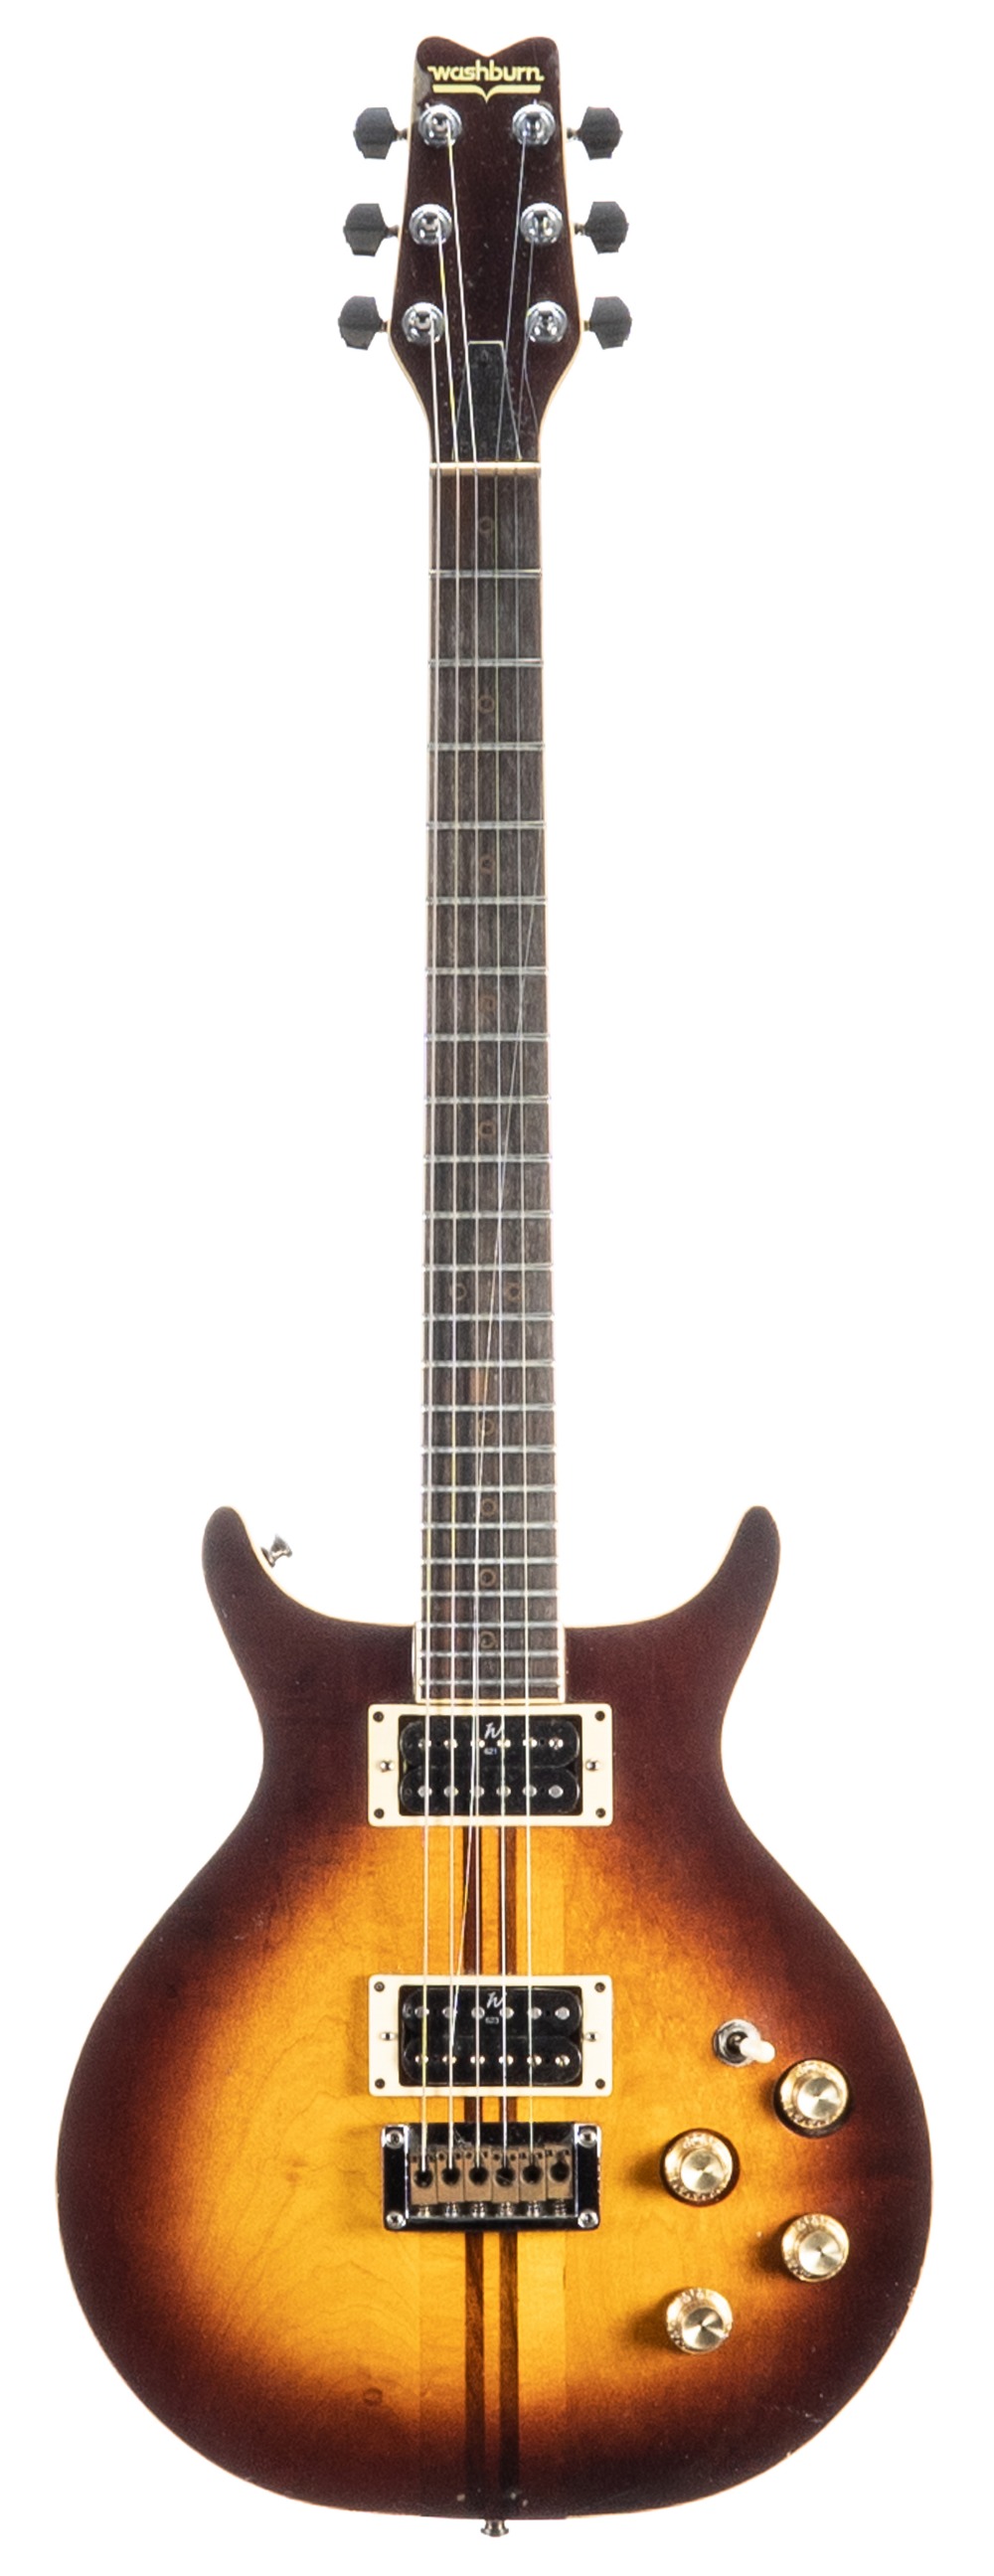 1979 Washburn Wing Series Falcon electric guitar, ser. no. 7xxx9; Finish: sunburst, various knocks